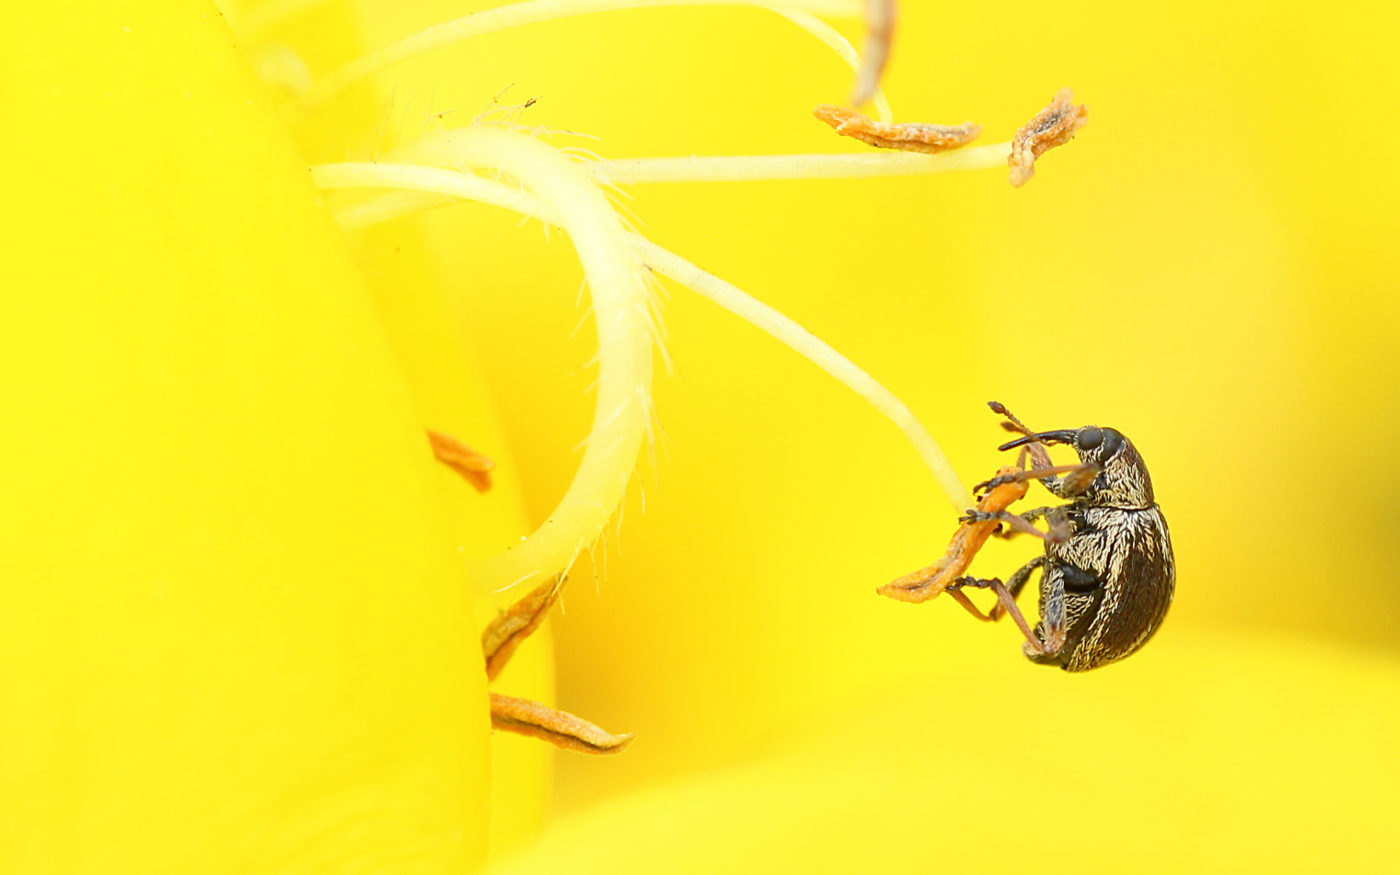 Broom weevil, Exapion fuscirostre, on a yellow flower